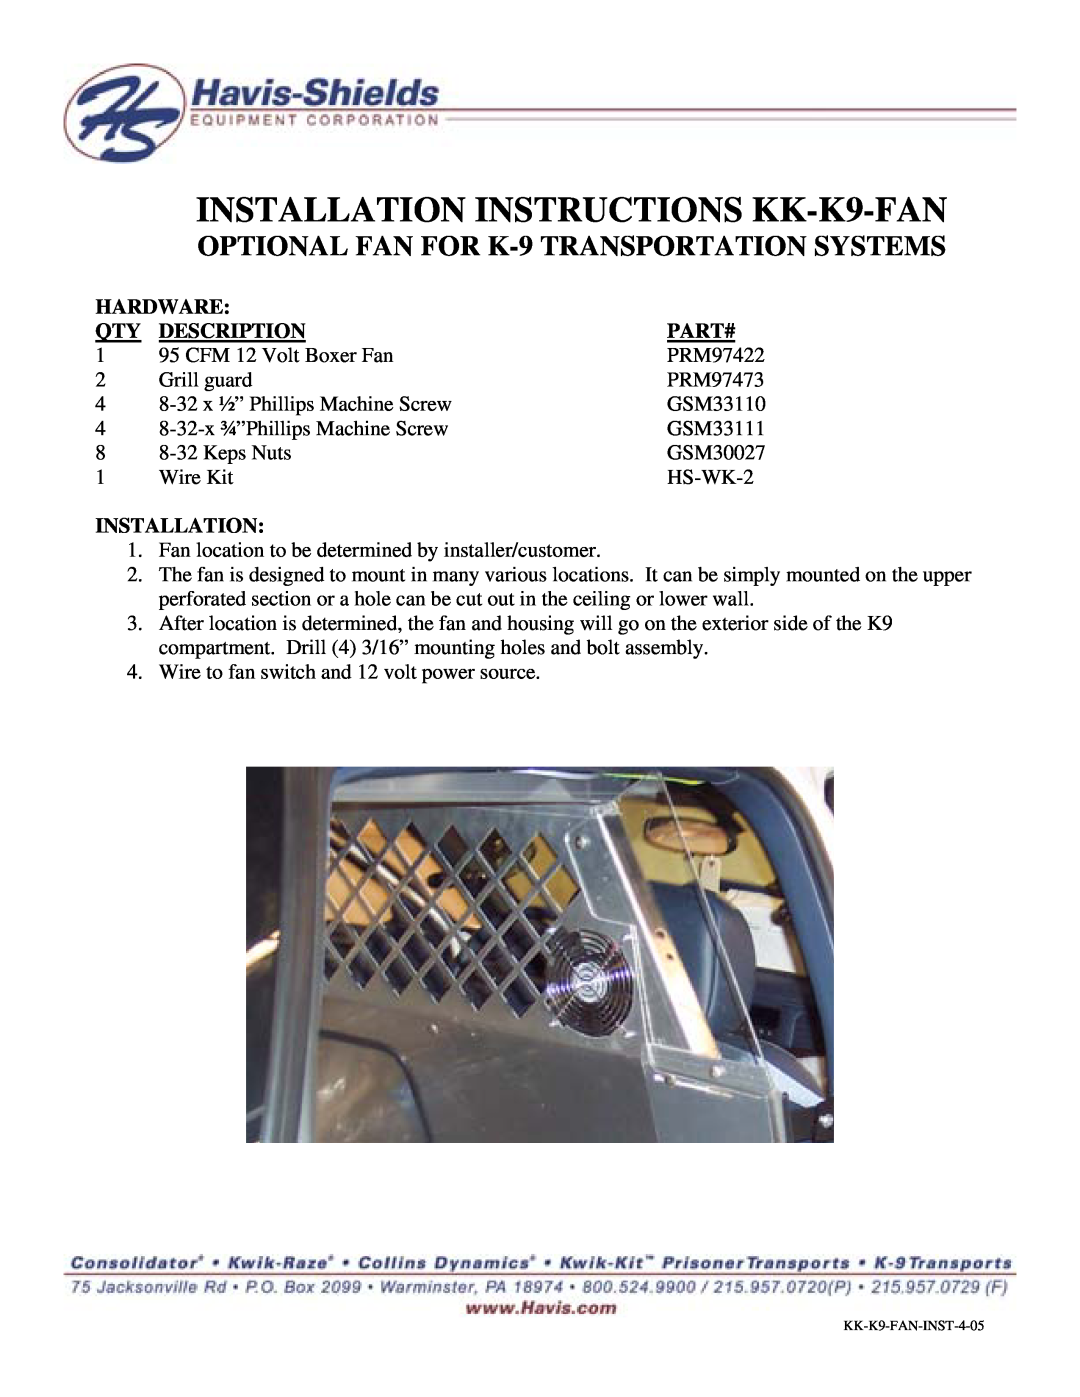 Havis-Shields PRM97473 installation instructions INSTALLATION INSTRUCTIONS KK-K9-FAN, Hardware, Description, Part# 